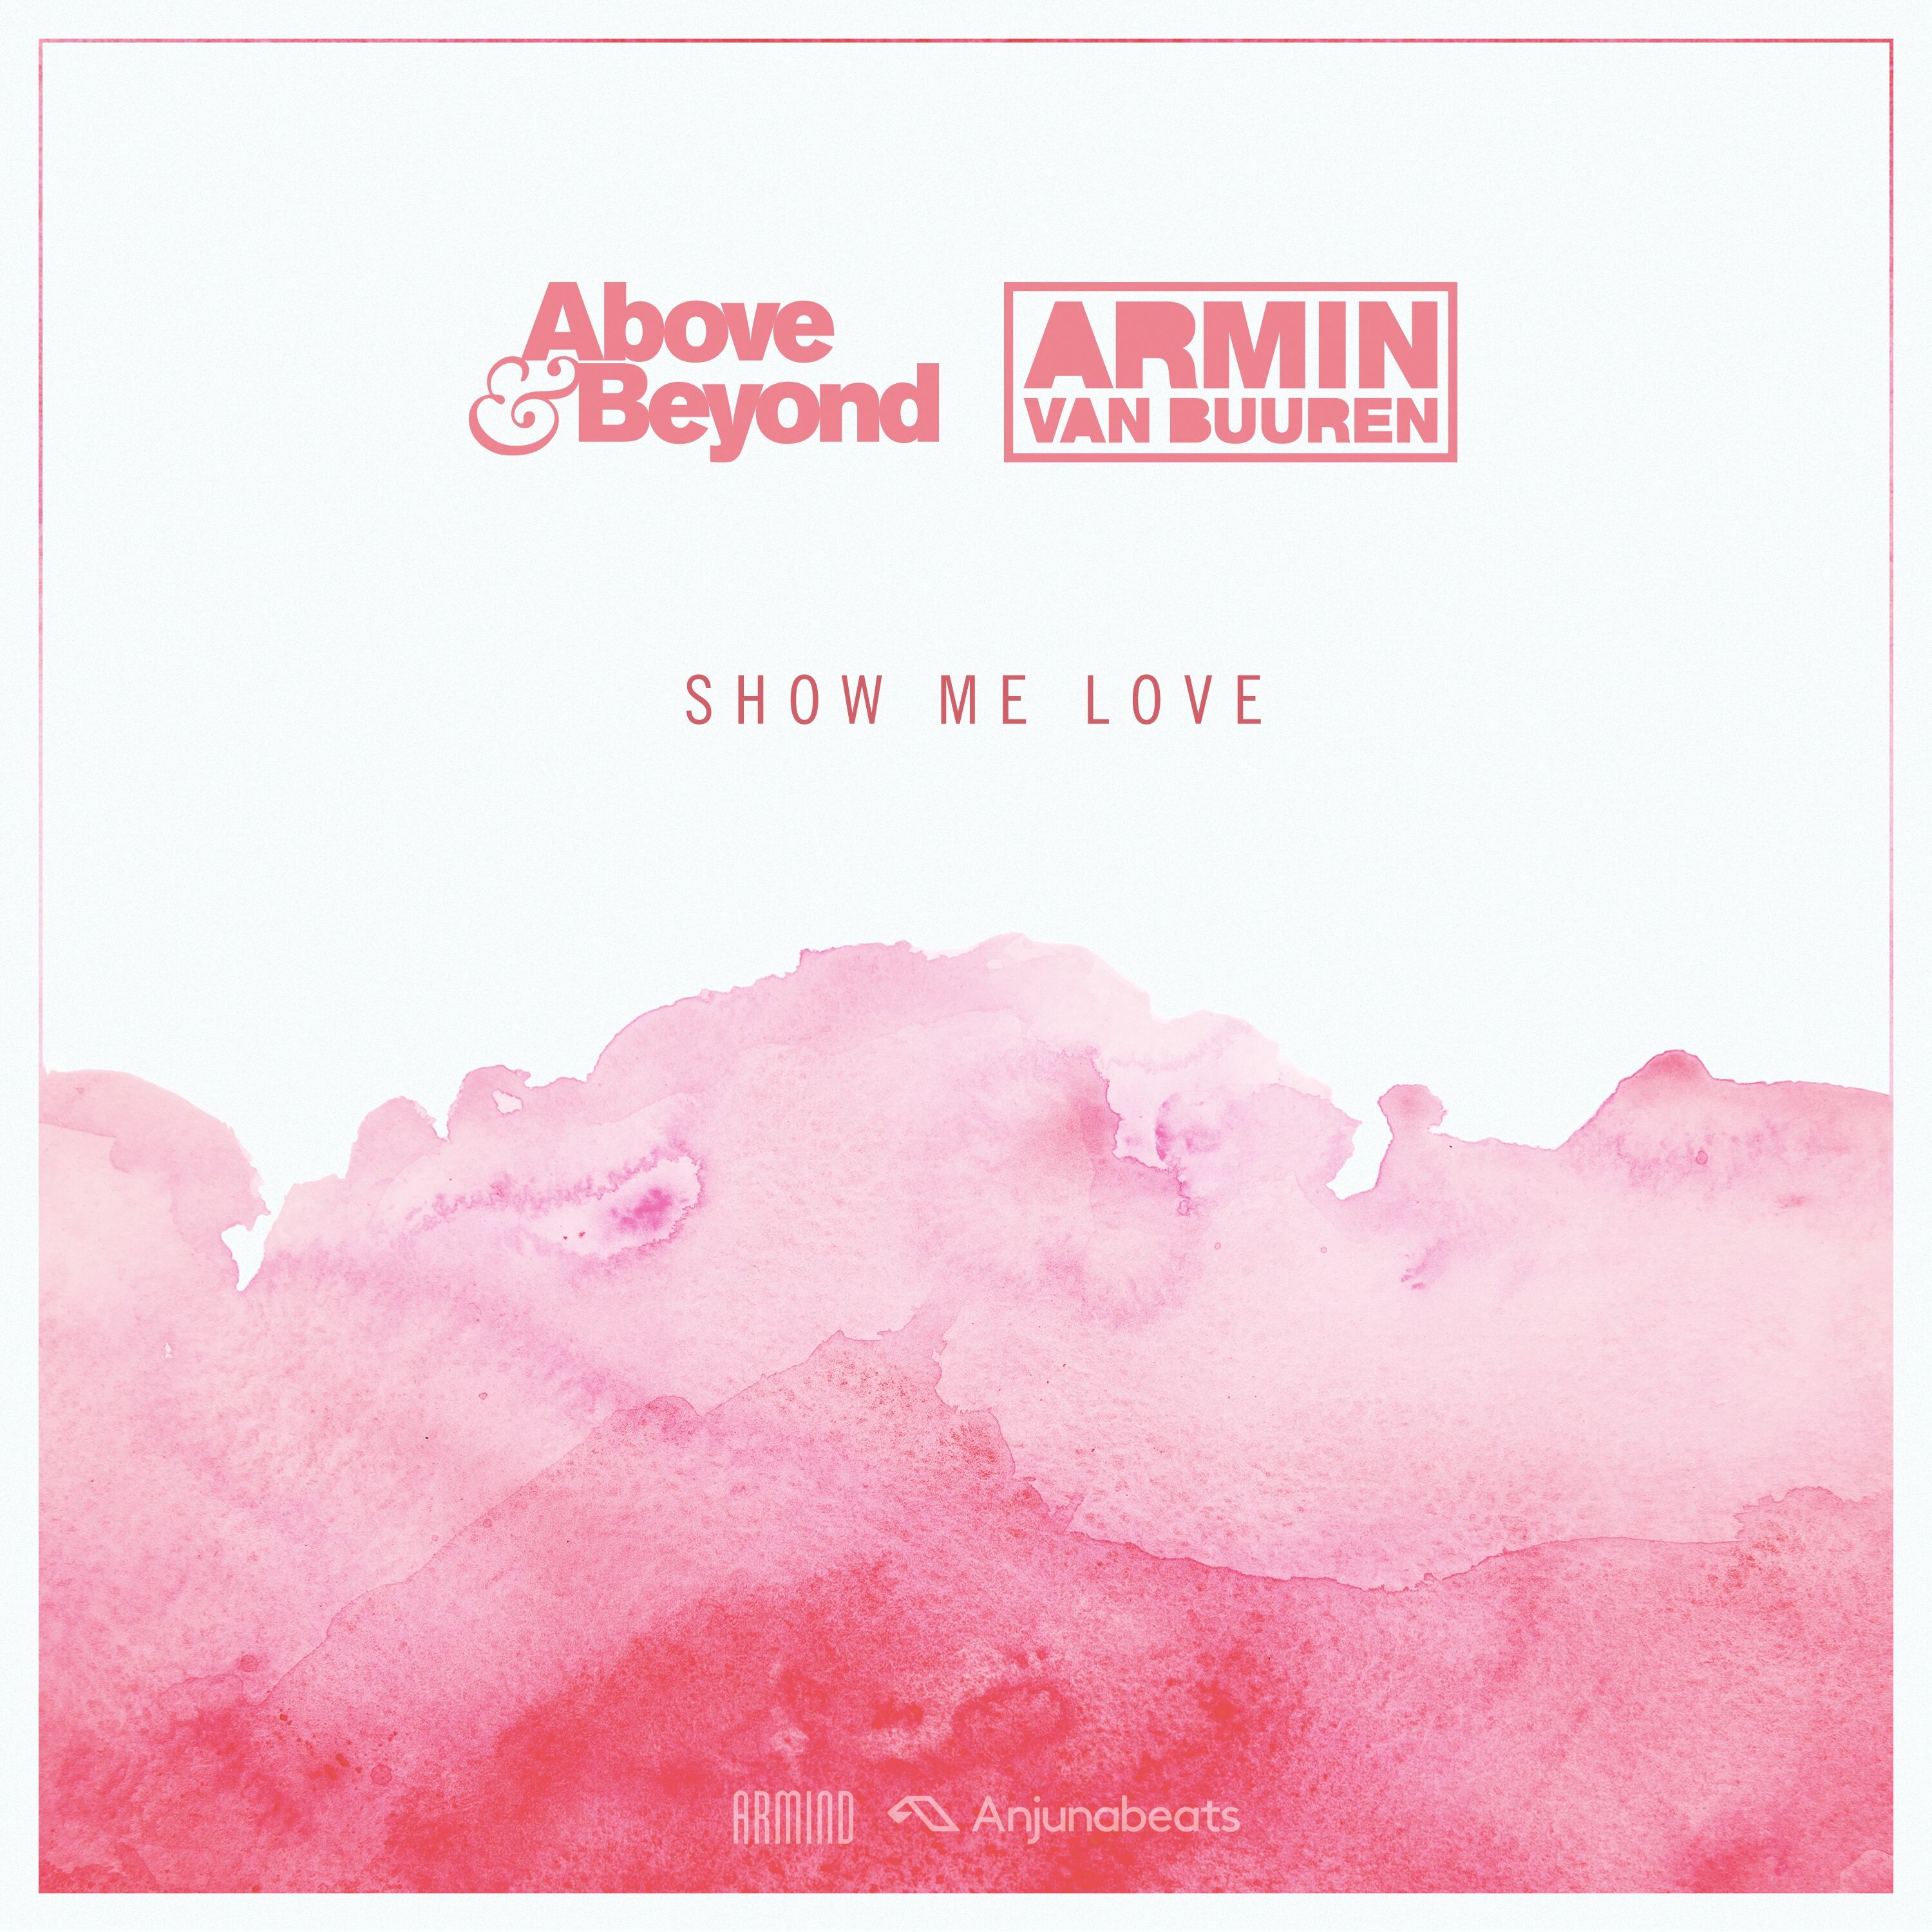 Above and Beyond vs Armin van Buuren presents Show Me Love on Armada Music